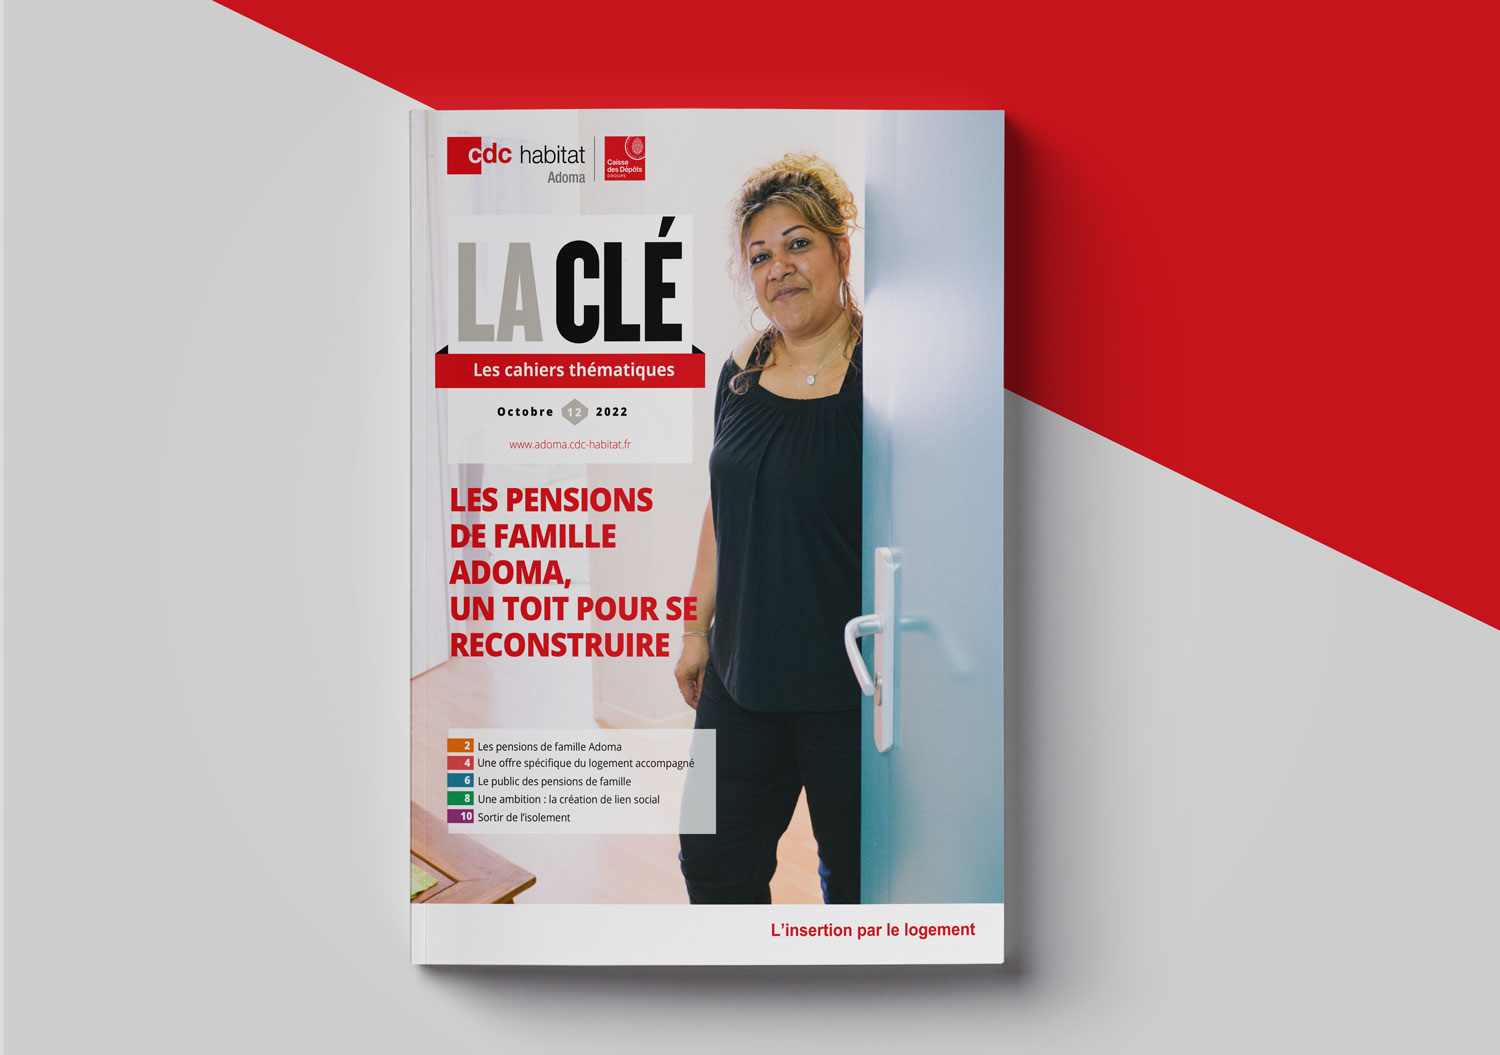 CDC HABITAT Adoma – Journal La Clé